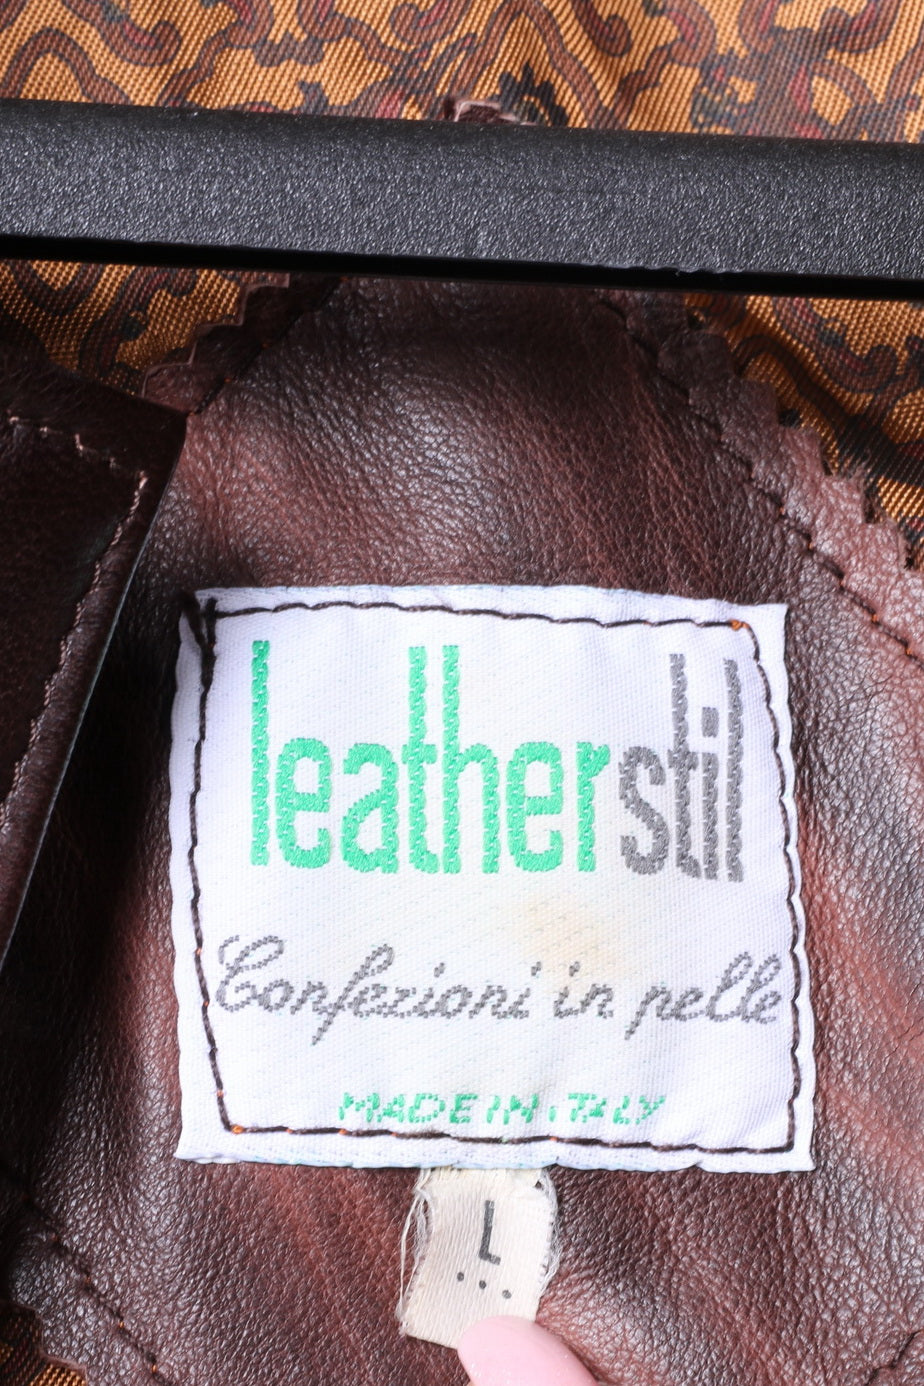 Leather Stil Confezioni Womens L Jacket Brown Leather Vintage Shoulder Pads Italy